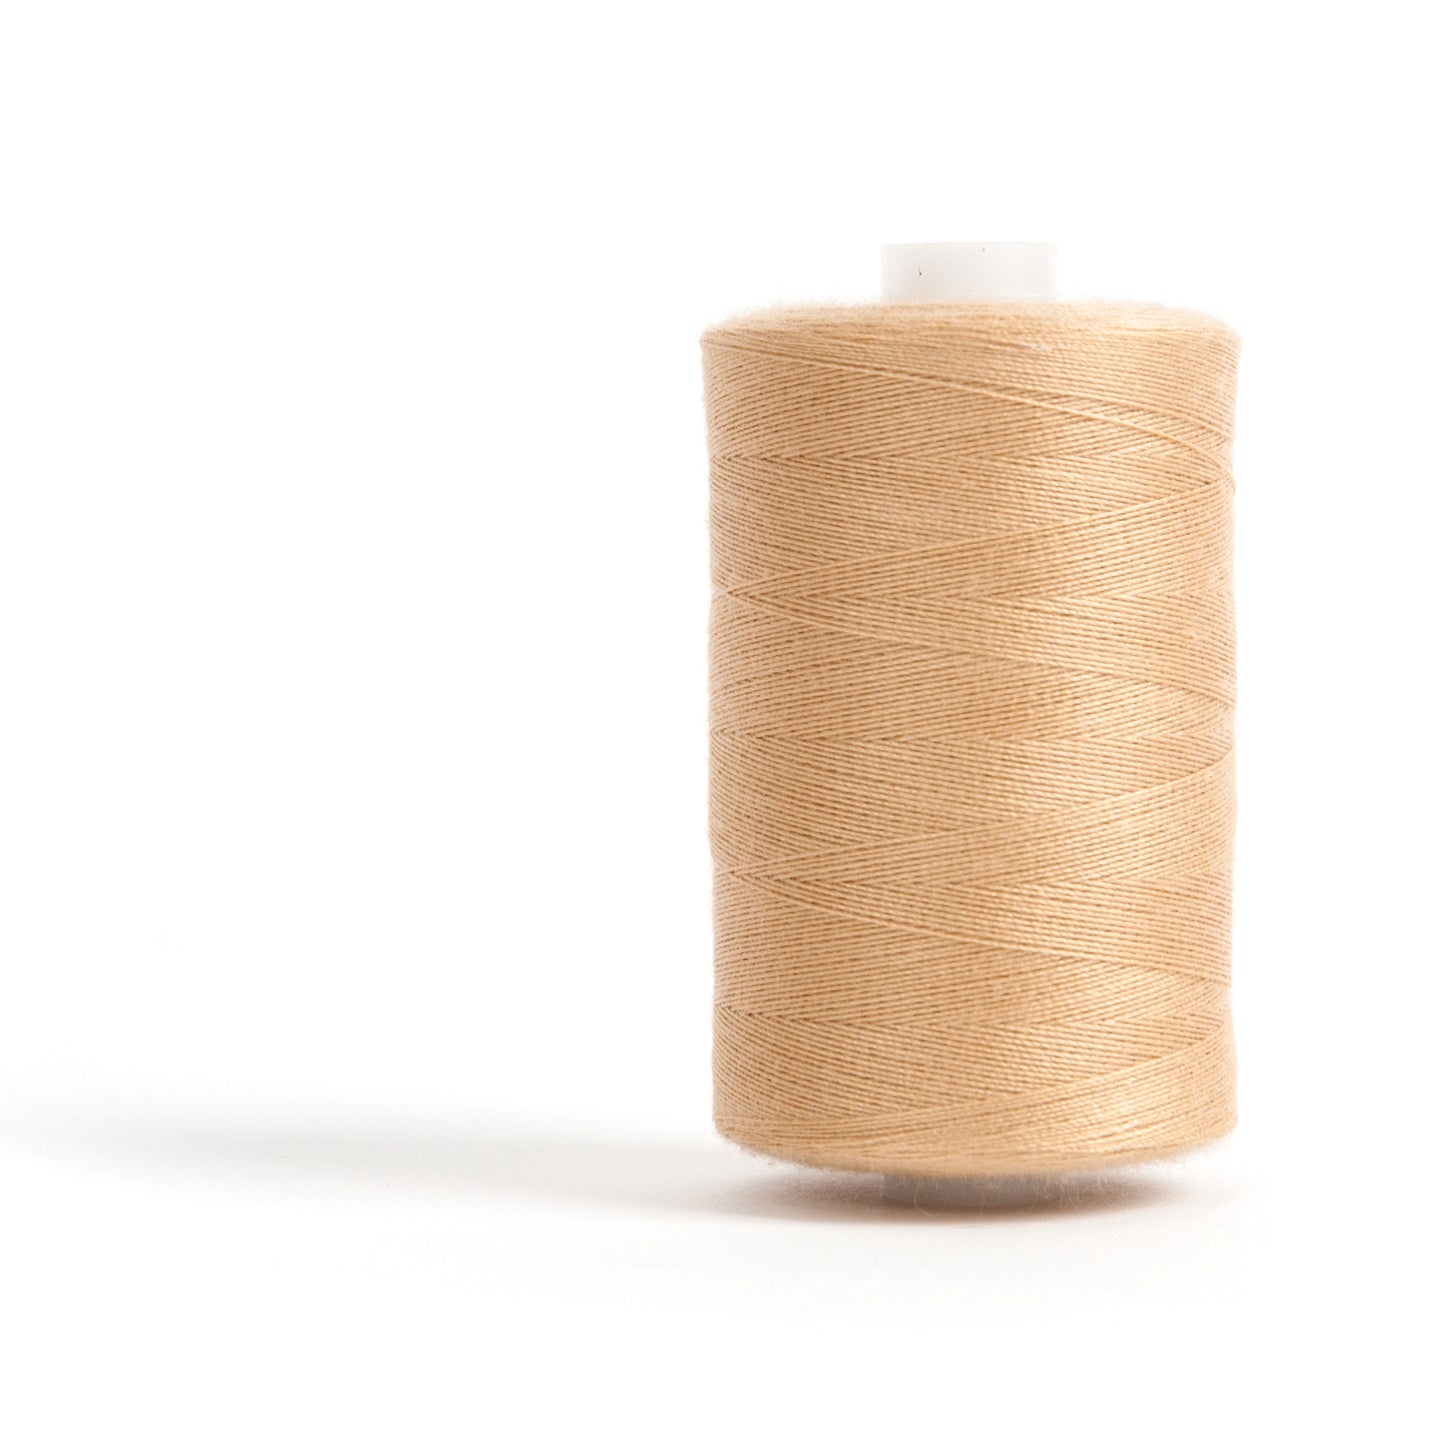 Sewing and Overlocking Thread: 1,000m: Beige